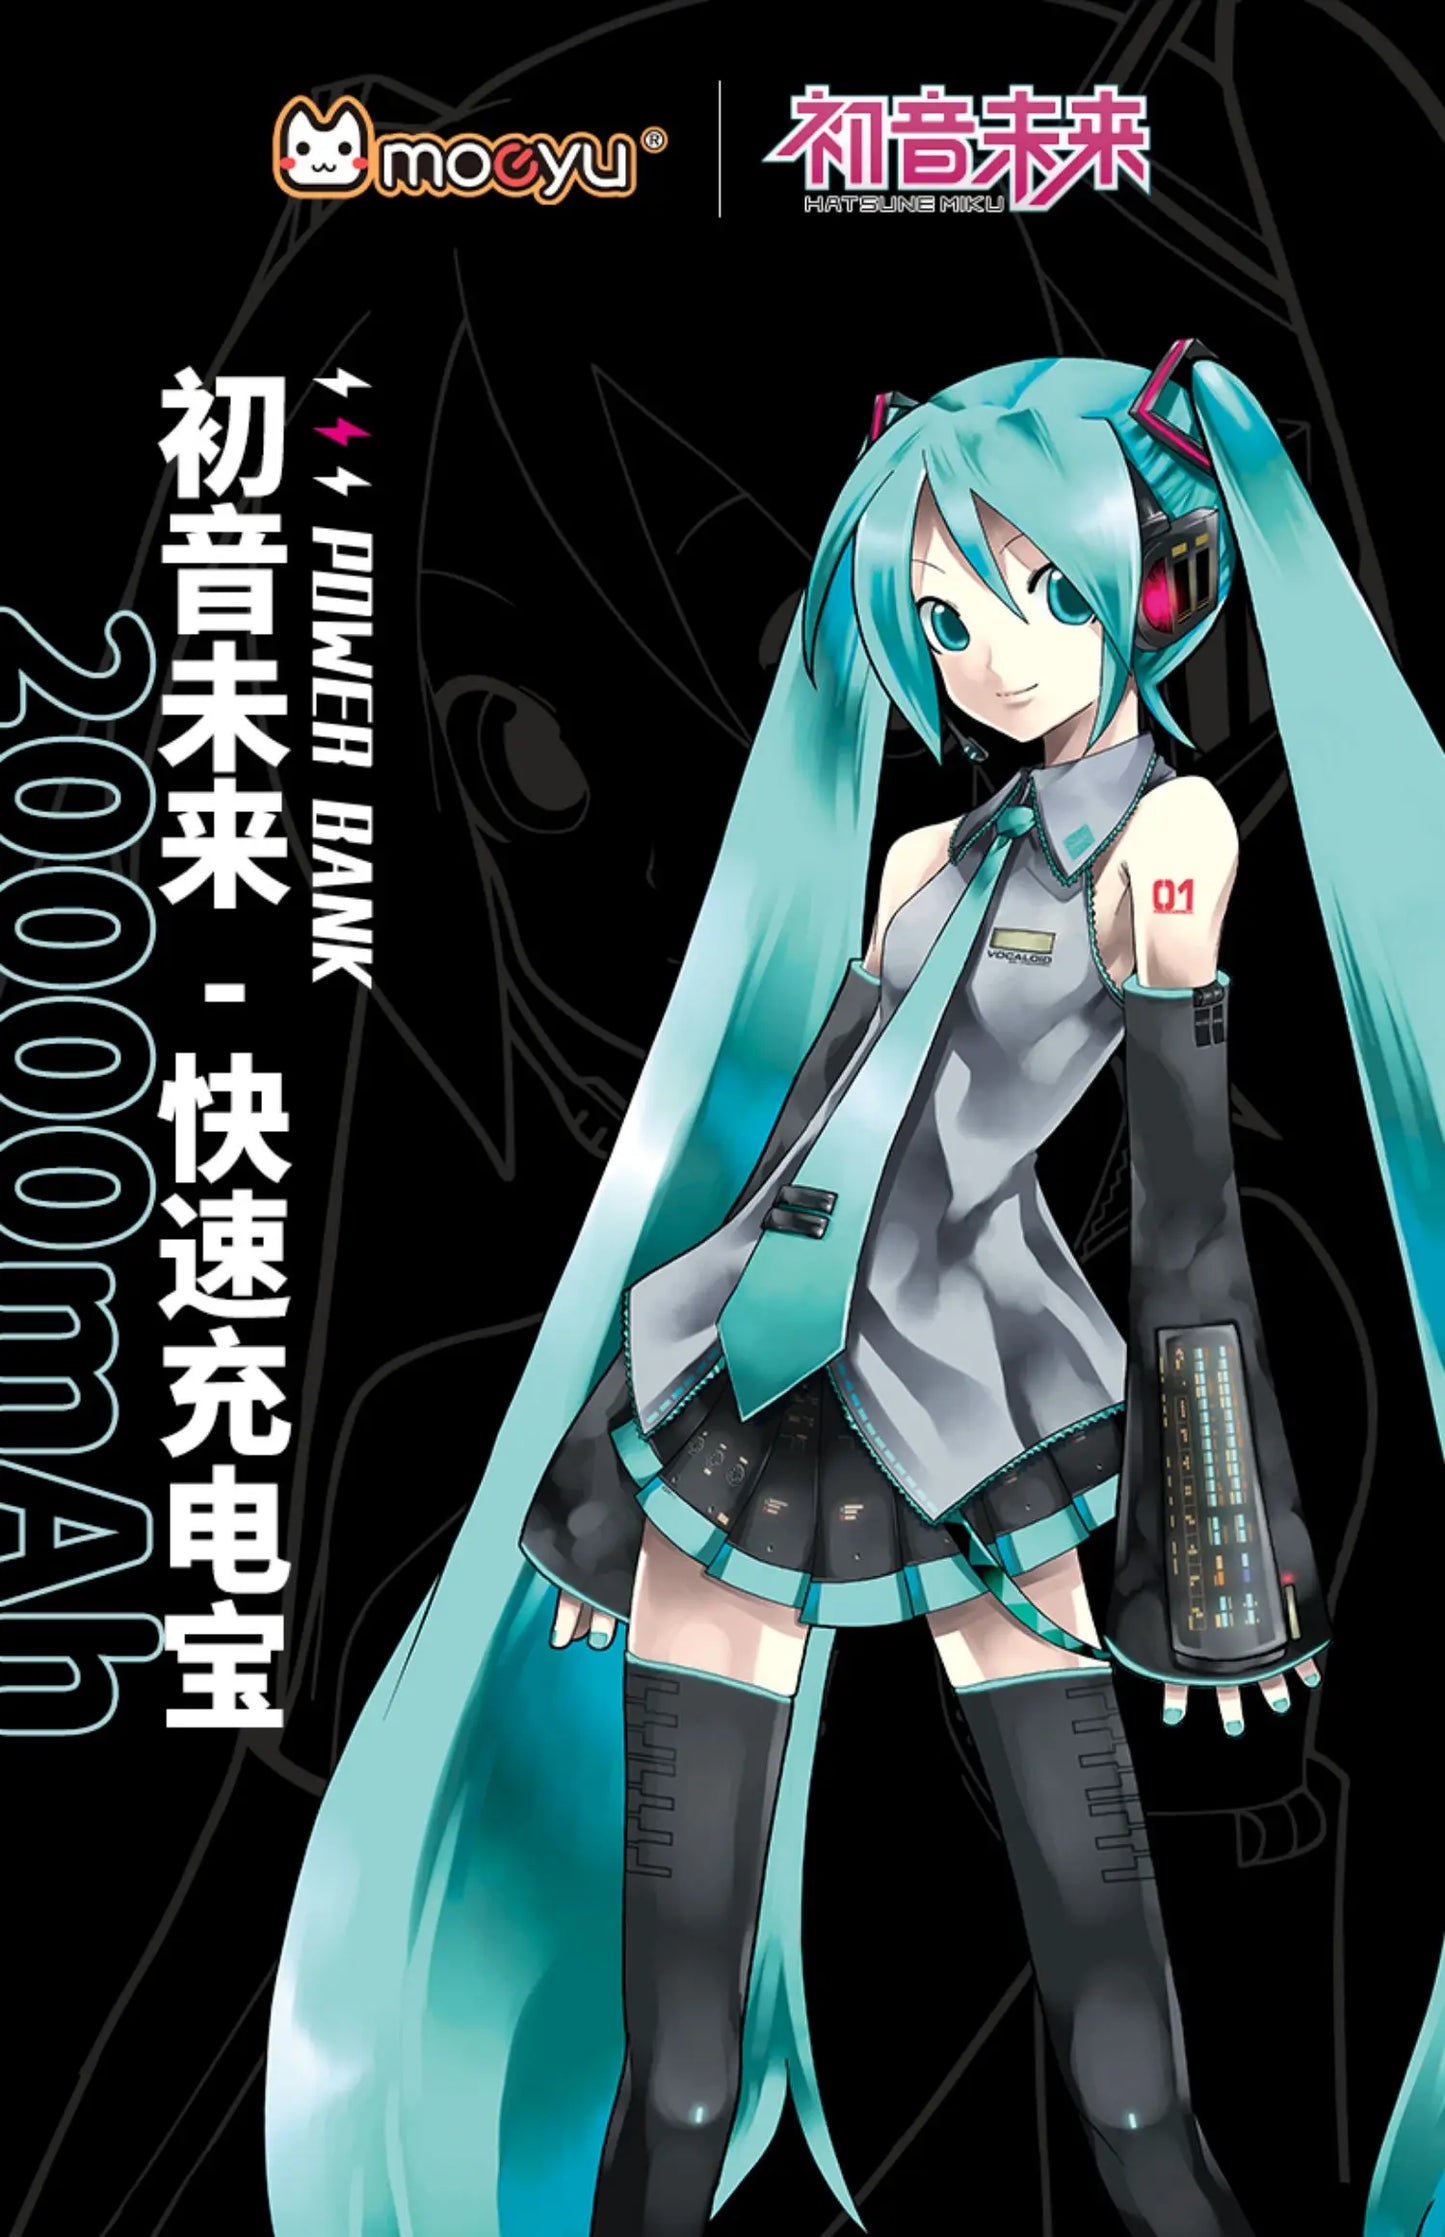 Vocaloid - Hatsune Miku: Official 20000mAh Powerbank - Moeyu